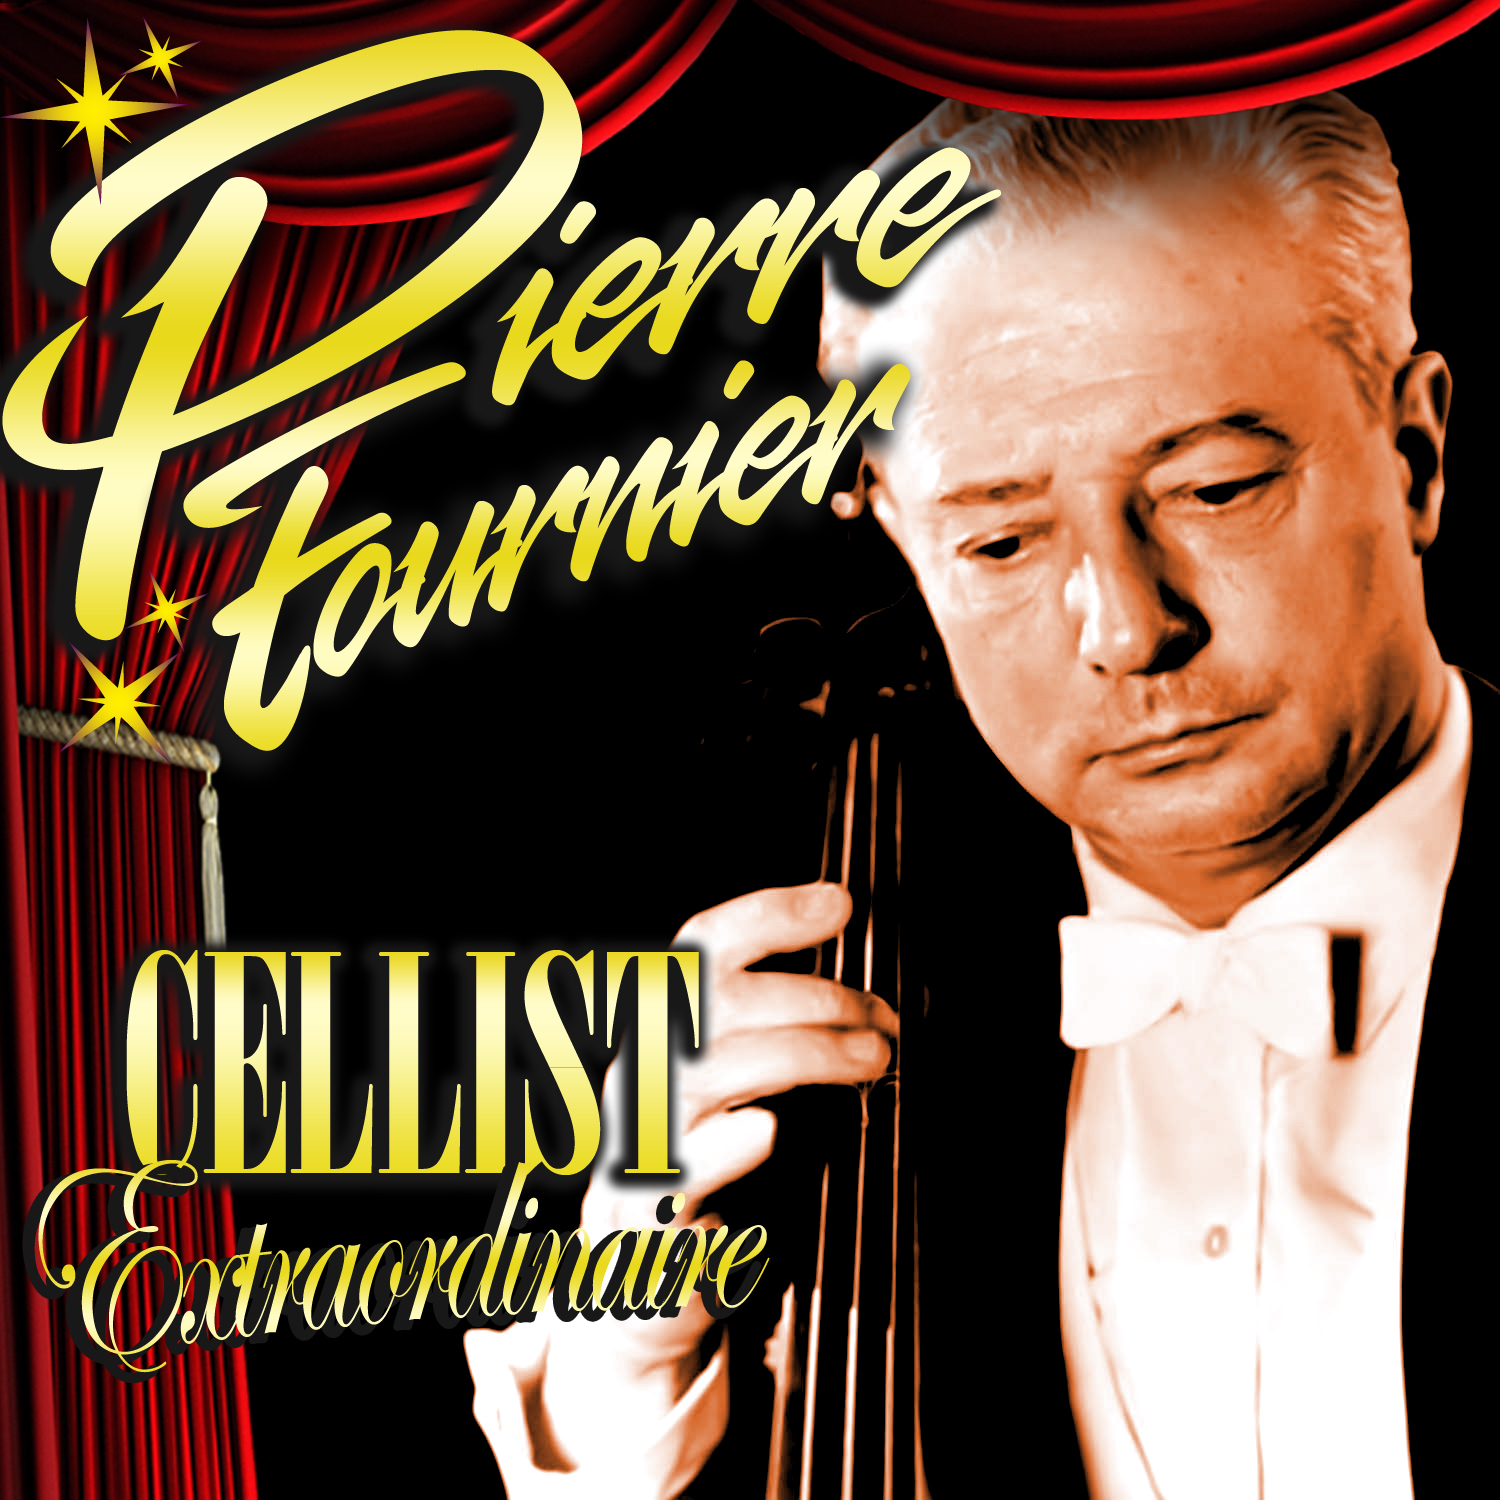 Cellist Extraordinaire